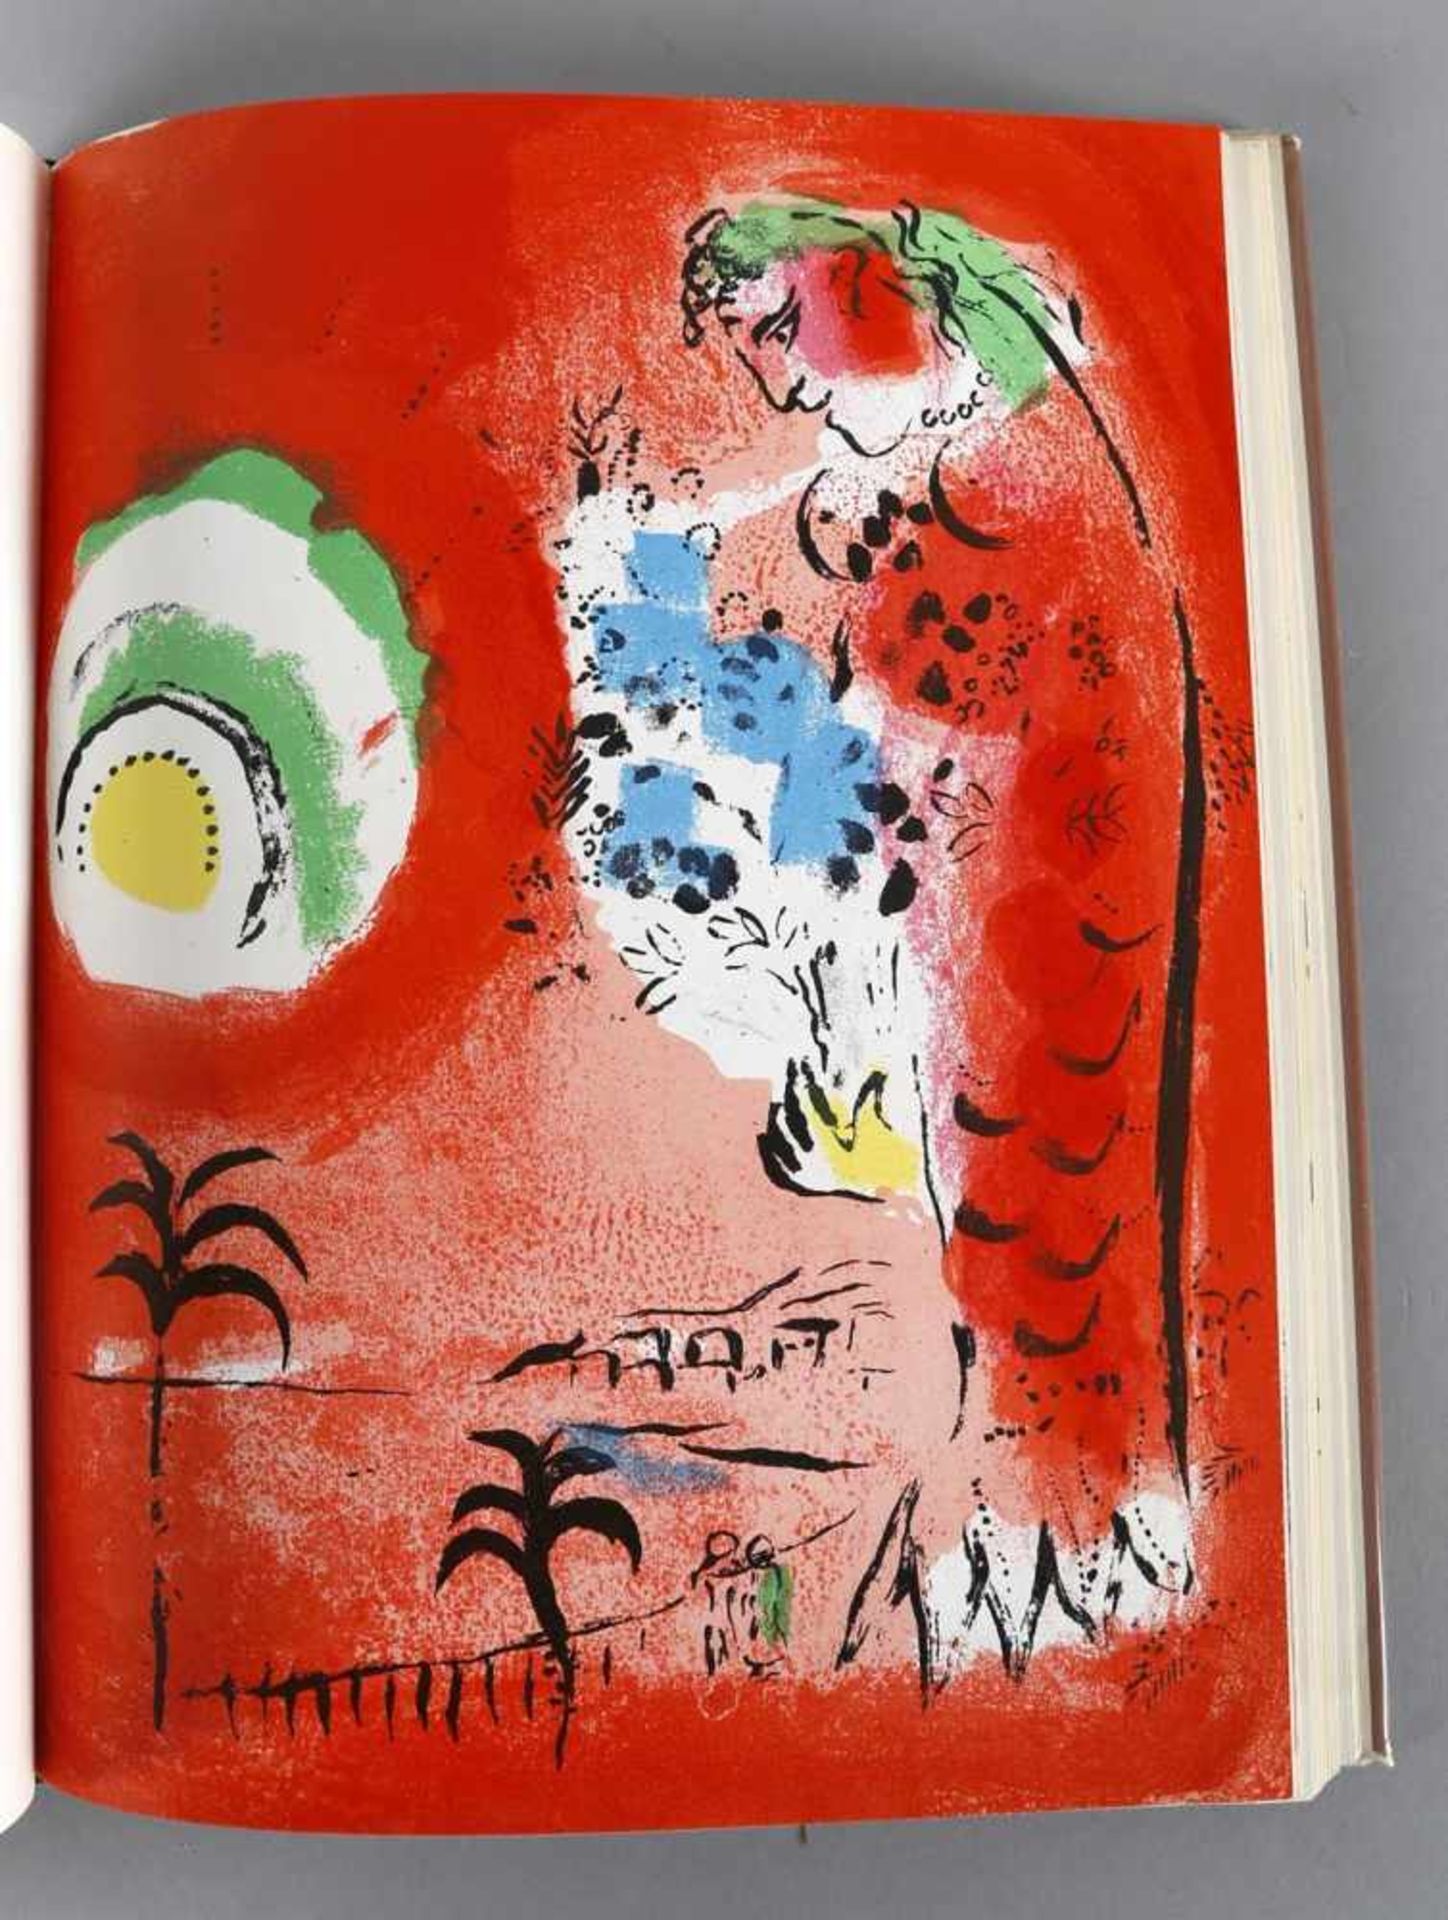 Chagall Lithograph, Vol. 1 - VI Marc Chagall-Mourlot, Julien Cain/Charles Sorlier, deutsche - Bild 4 aus 5